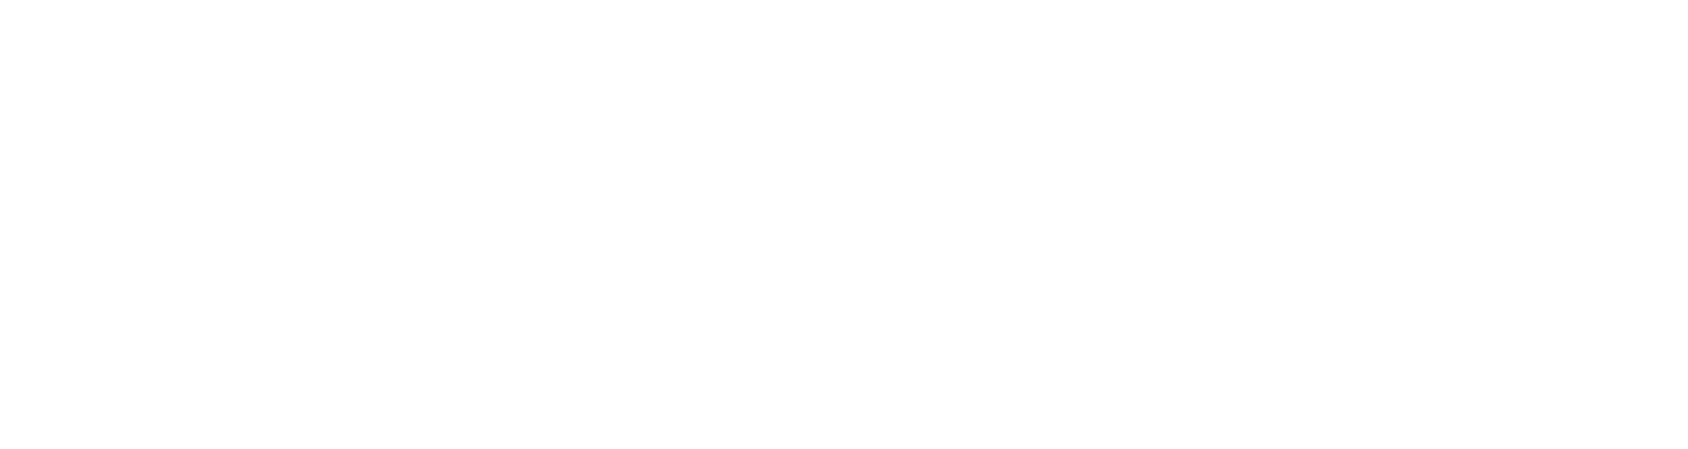 Vape Smoke Ind